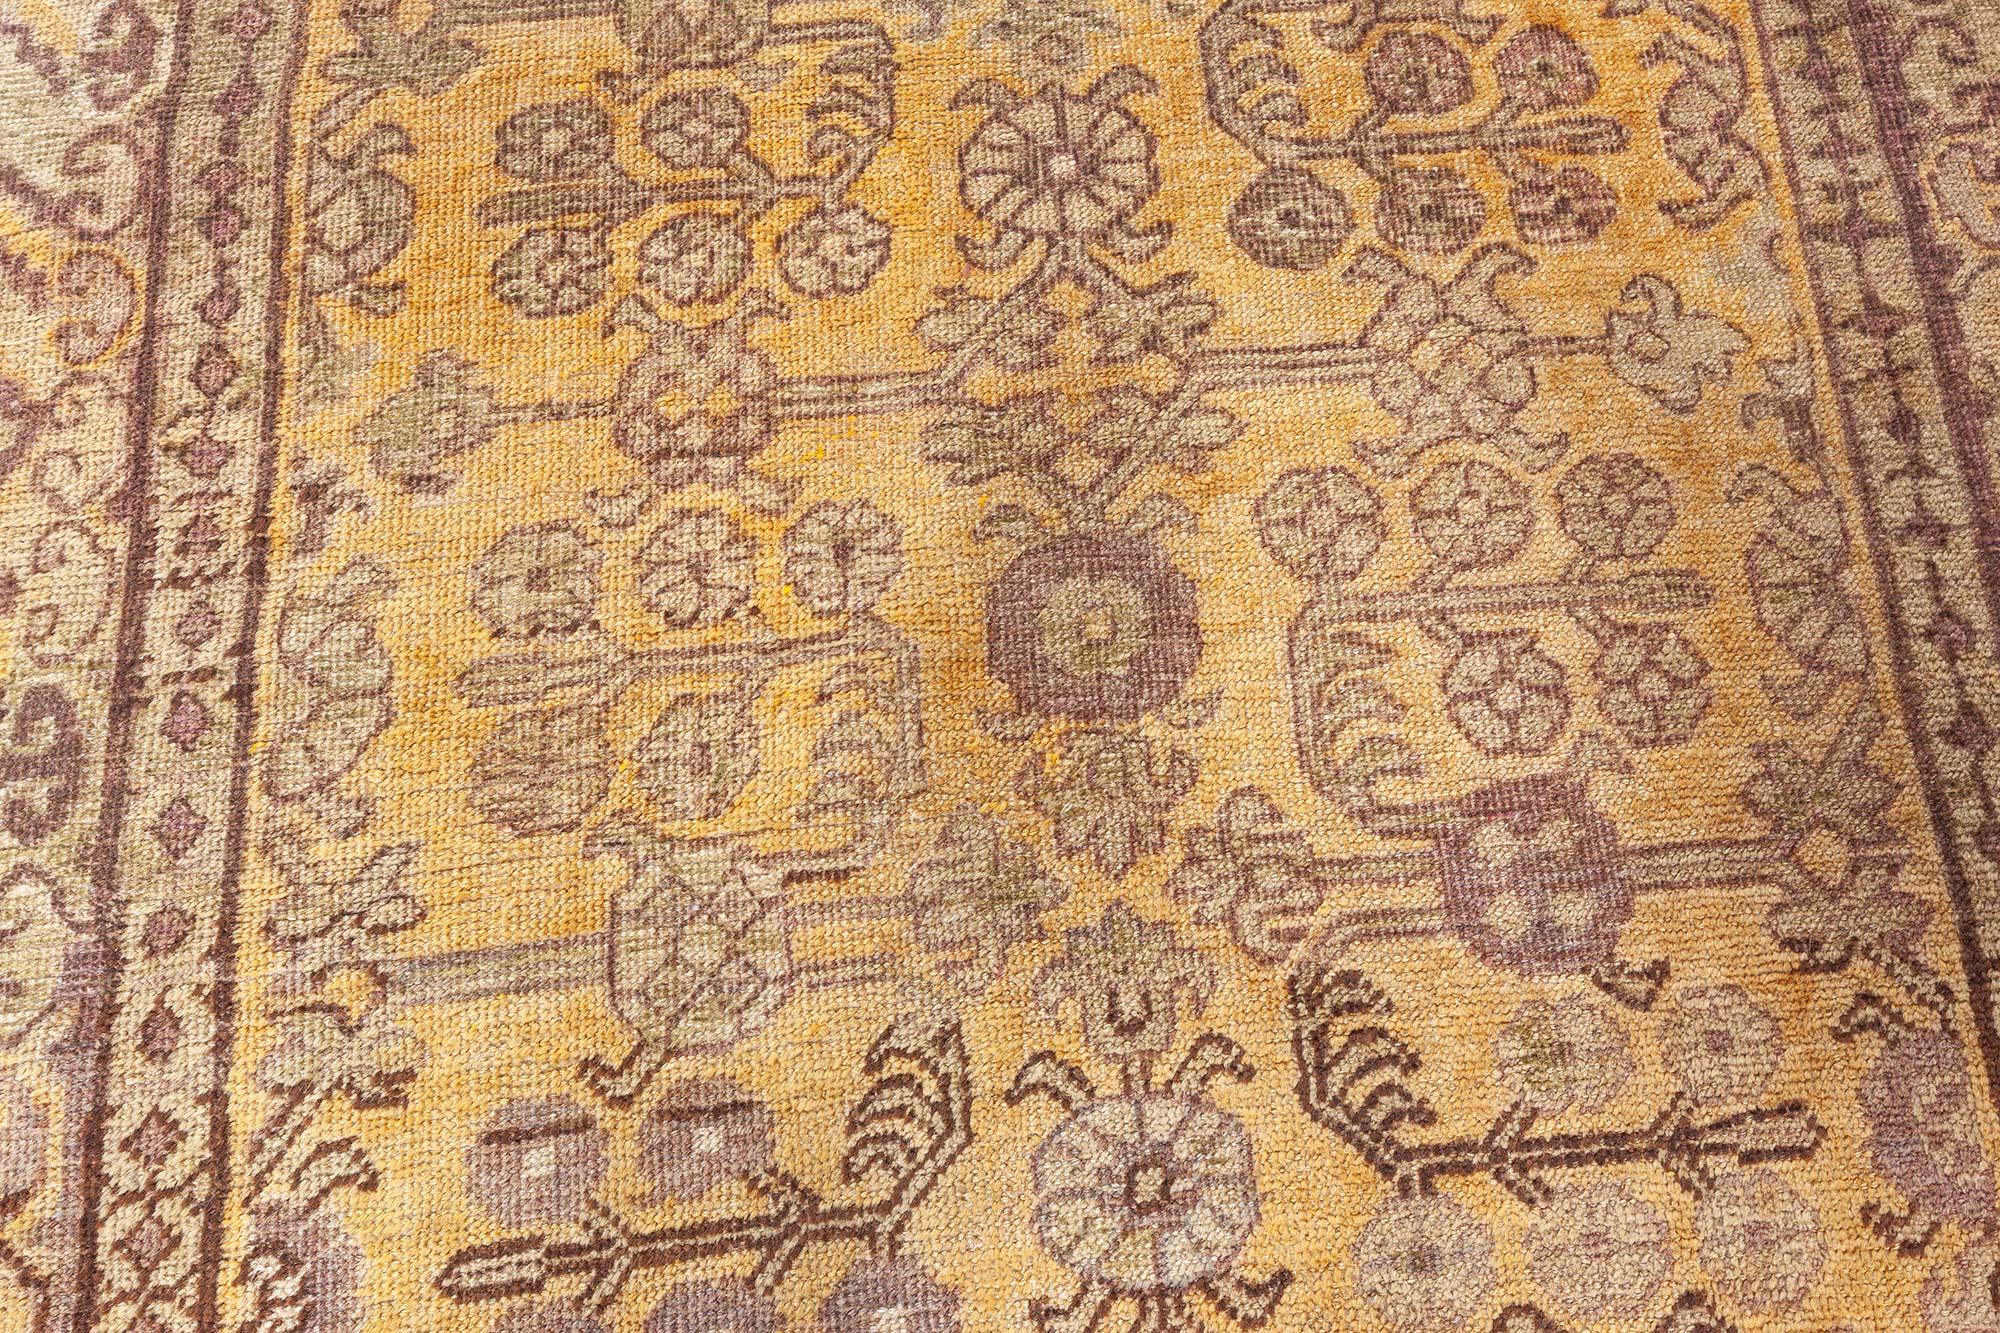 High-quality Vintage Samarkand Handmade Wool Rug by Doris Leslie Blau
Size: 3'9